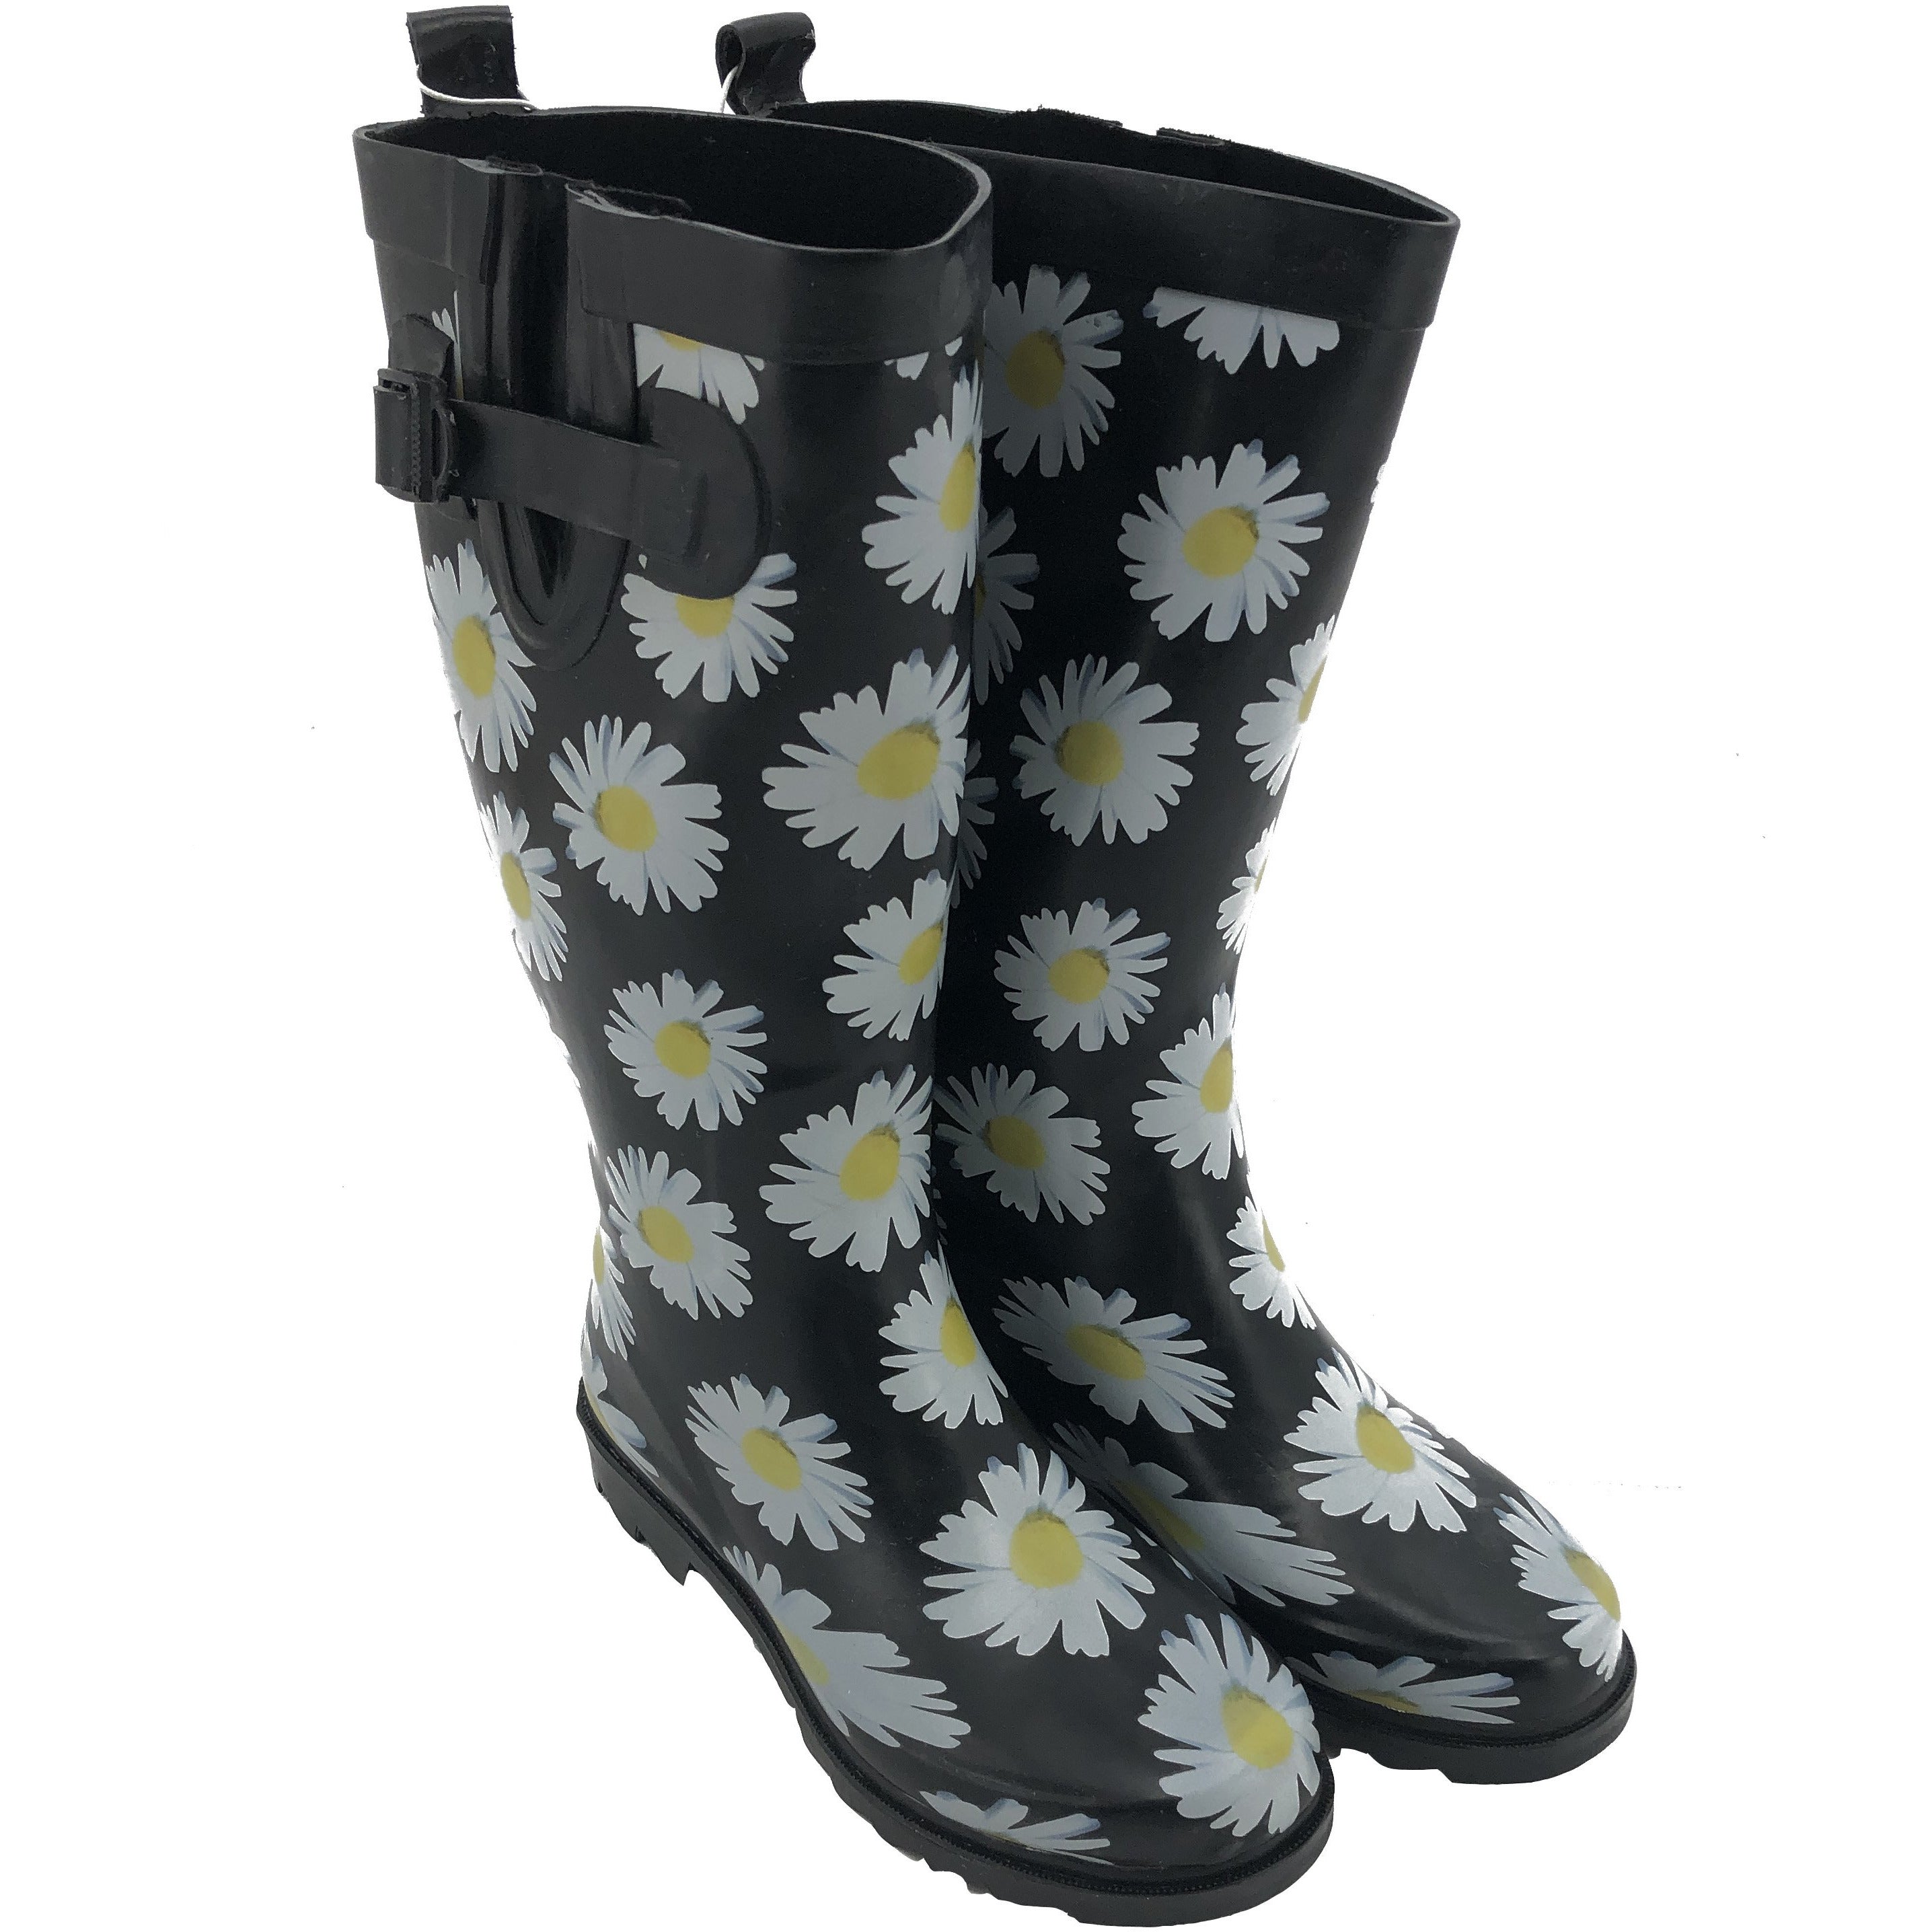 Flower print rubber boots